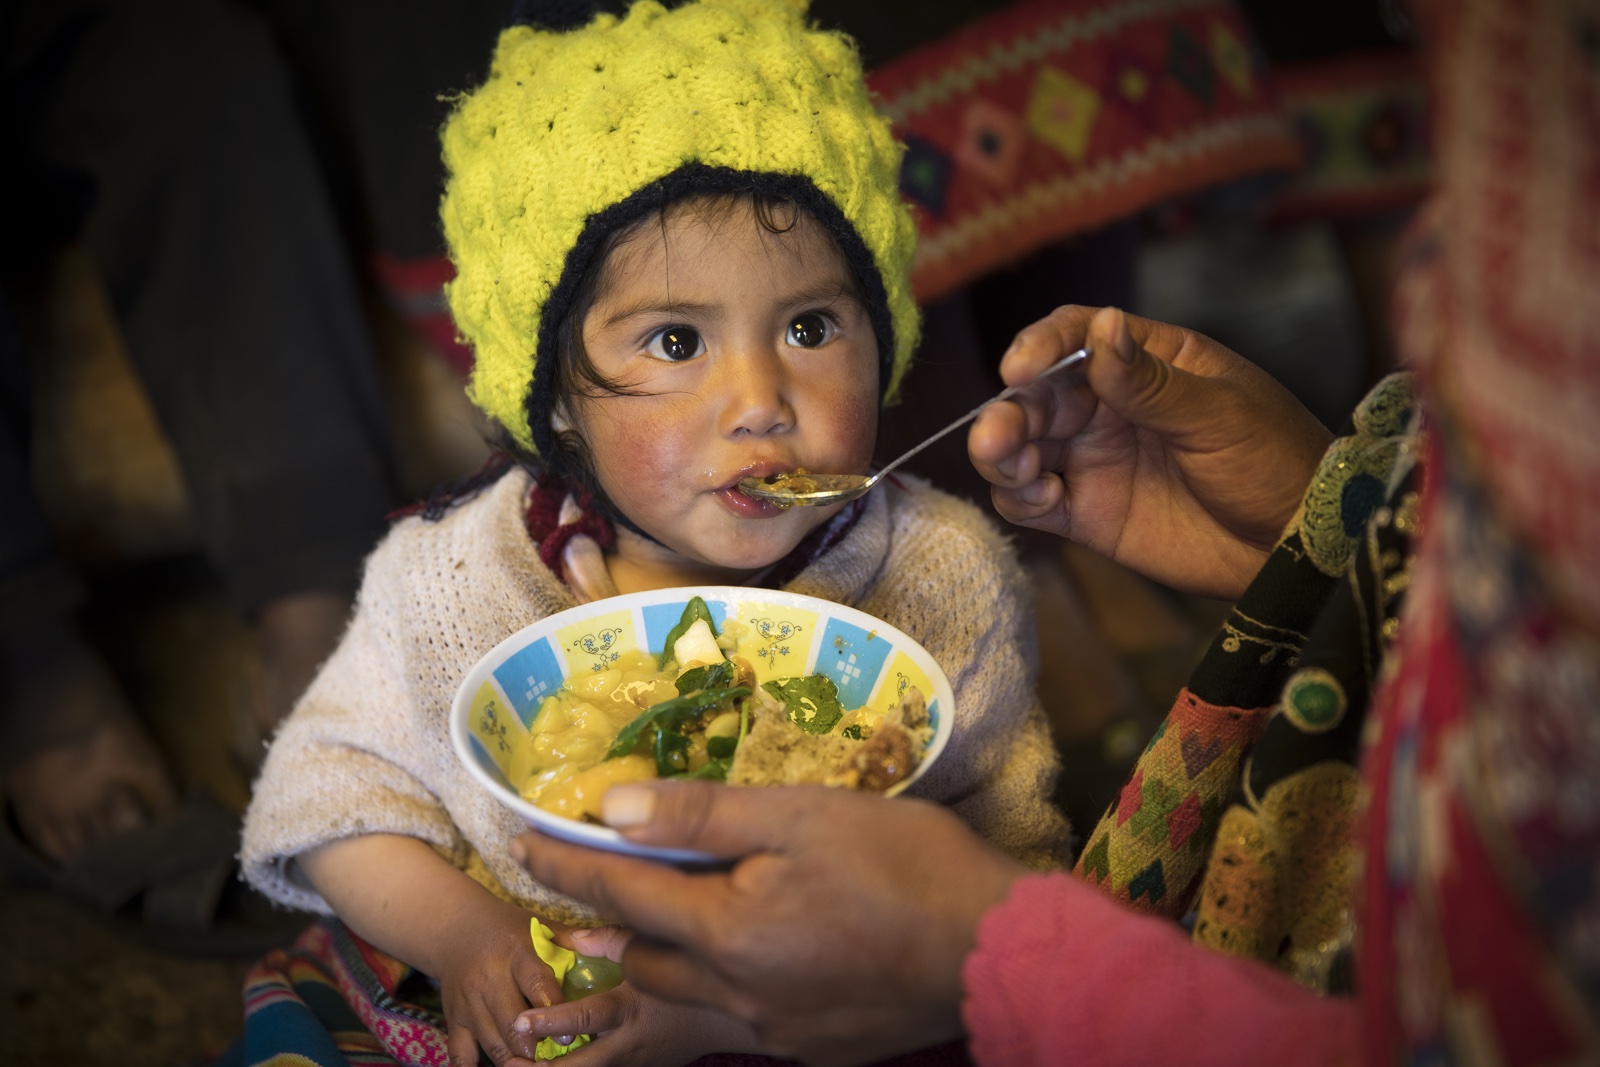 Oxfam Novib Seeds Peru kindje eten